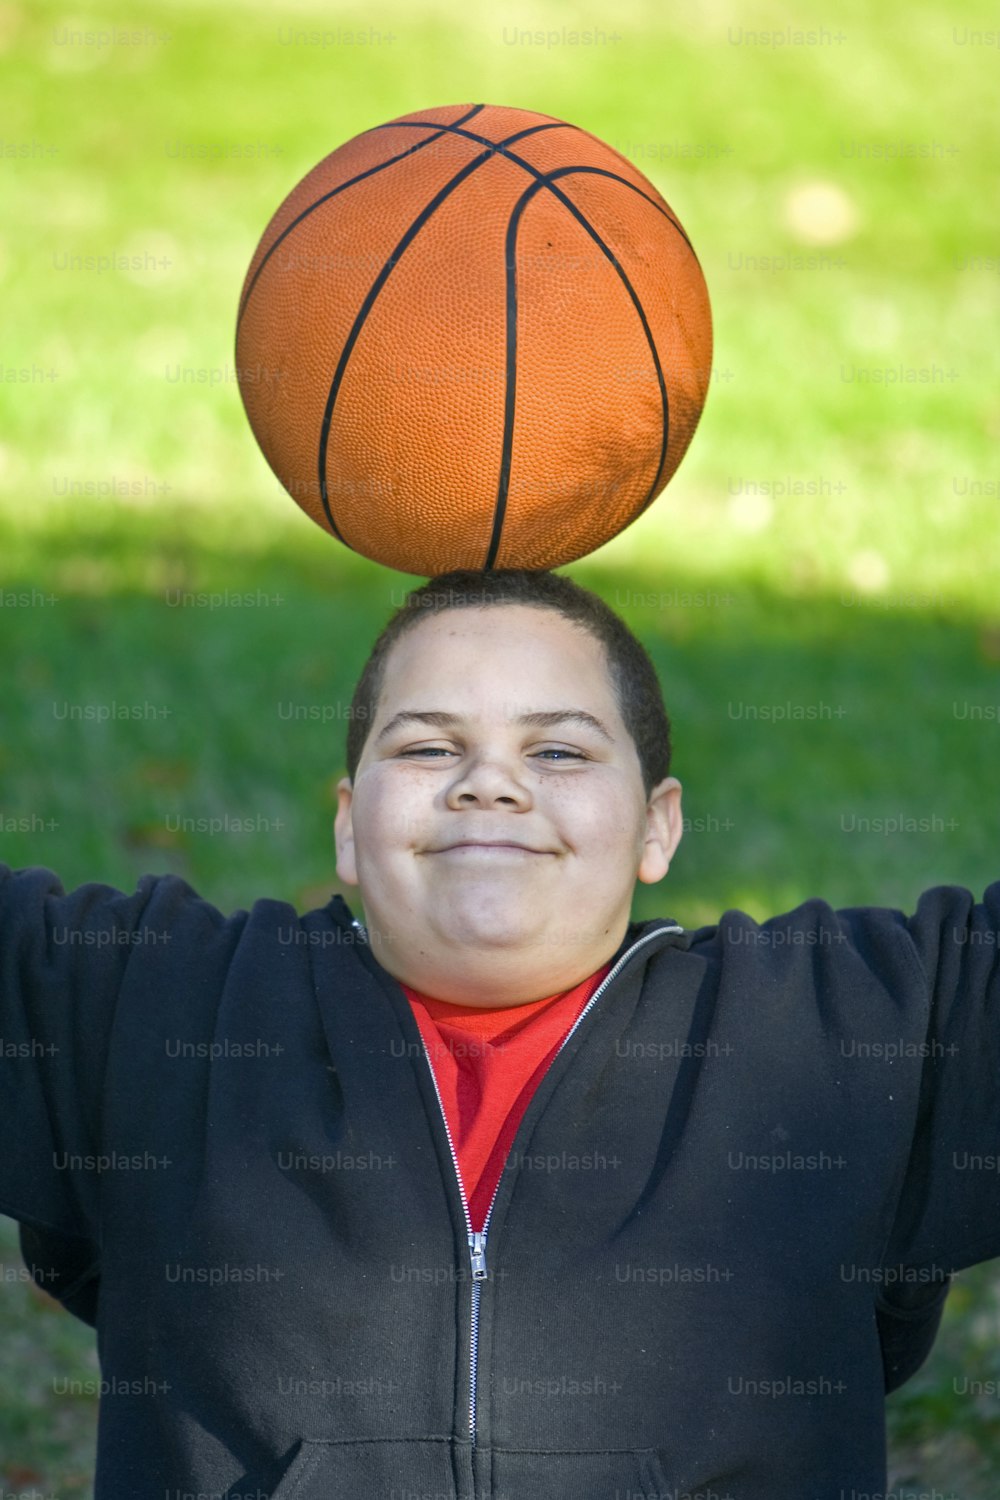 Boy with basketball balanced on head